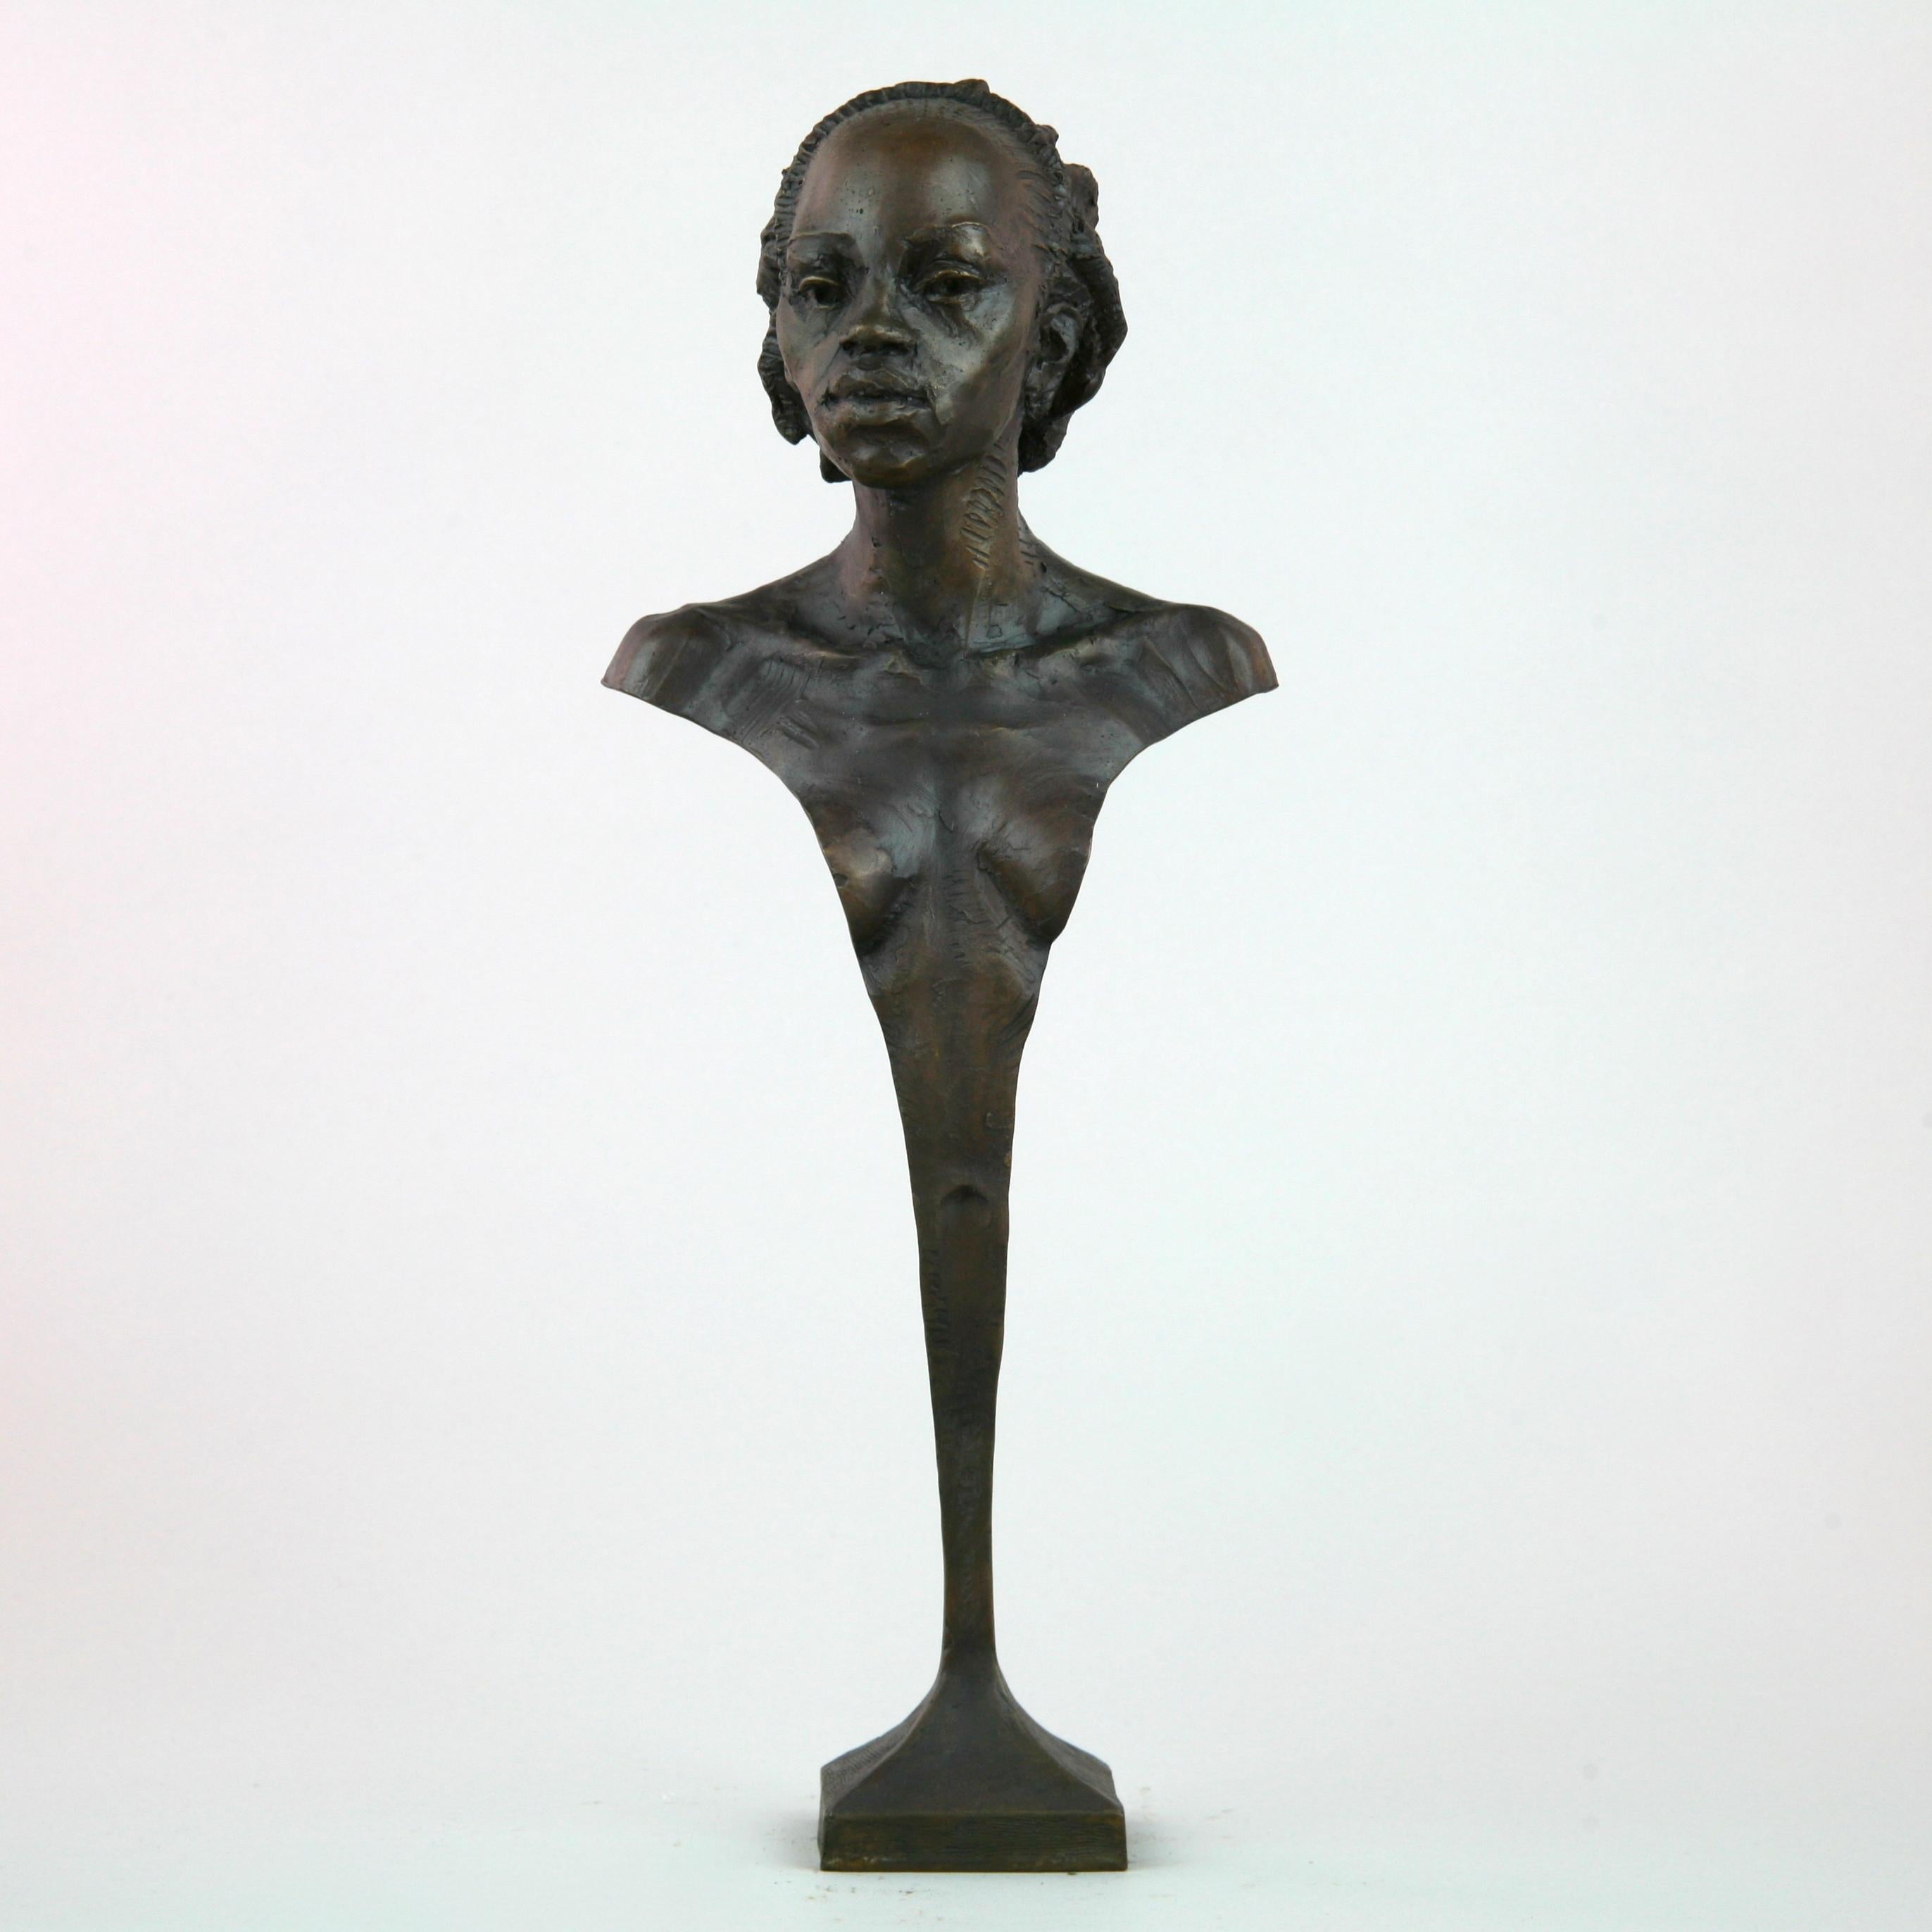 Andrzej Szymczyk Figurative Sculpture - Woman Warrior of Kau Bust - standing sculpture limited edition bronze art modern